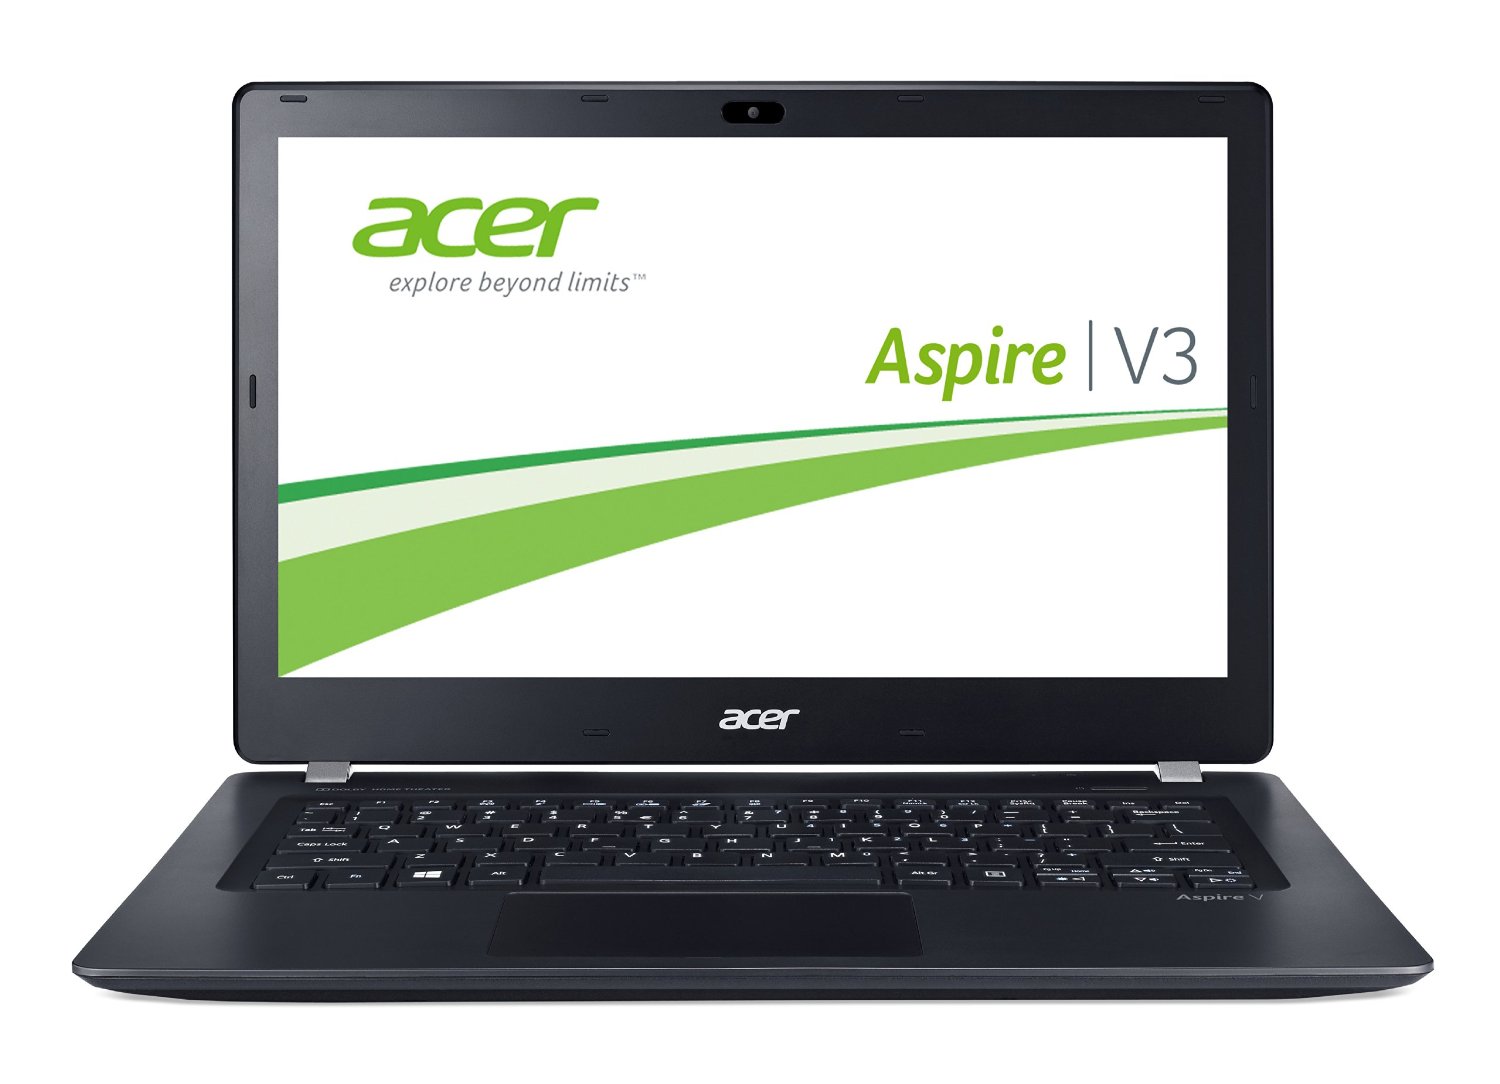 Acer Aspire V3-572P Drivers Download - Driver Doctor